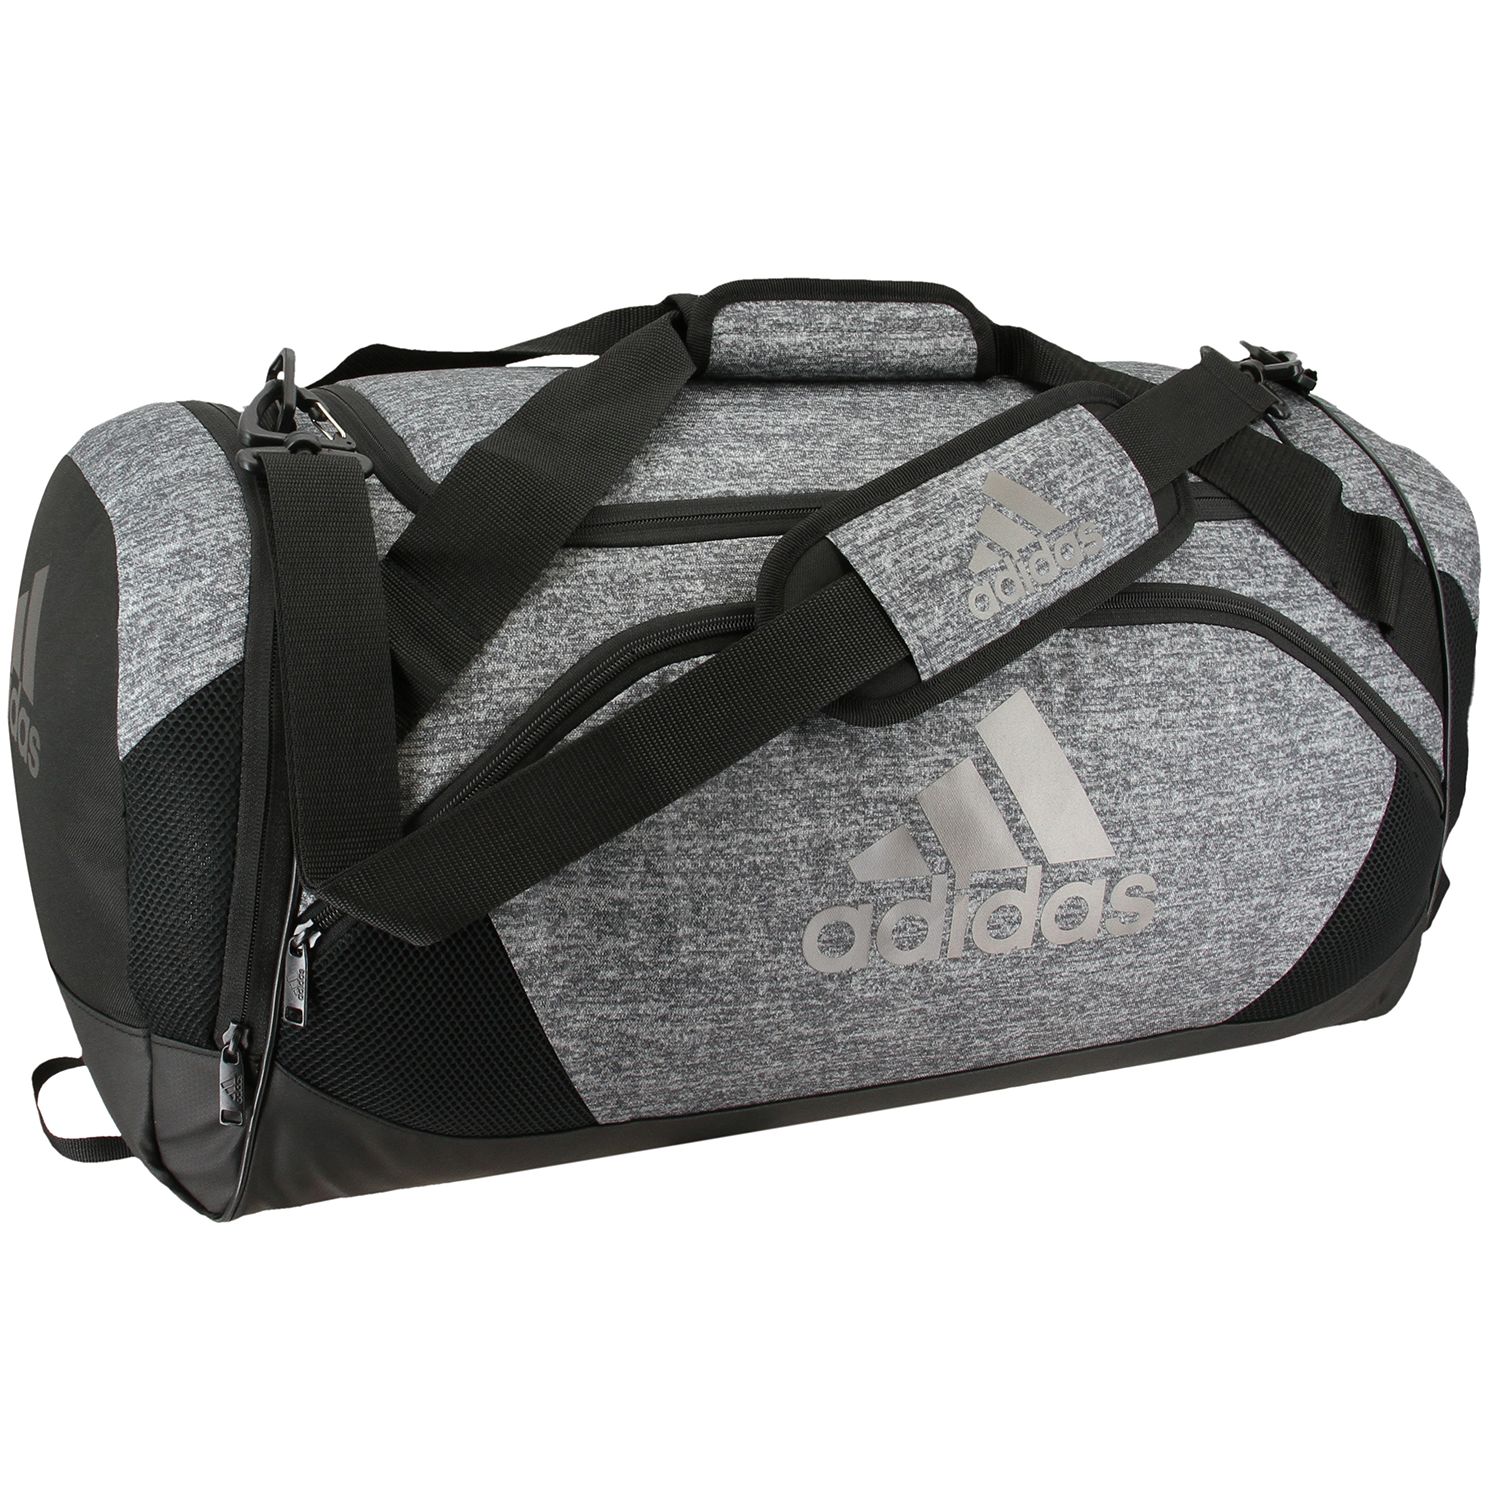 adidas team issue bag